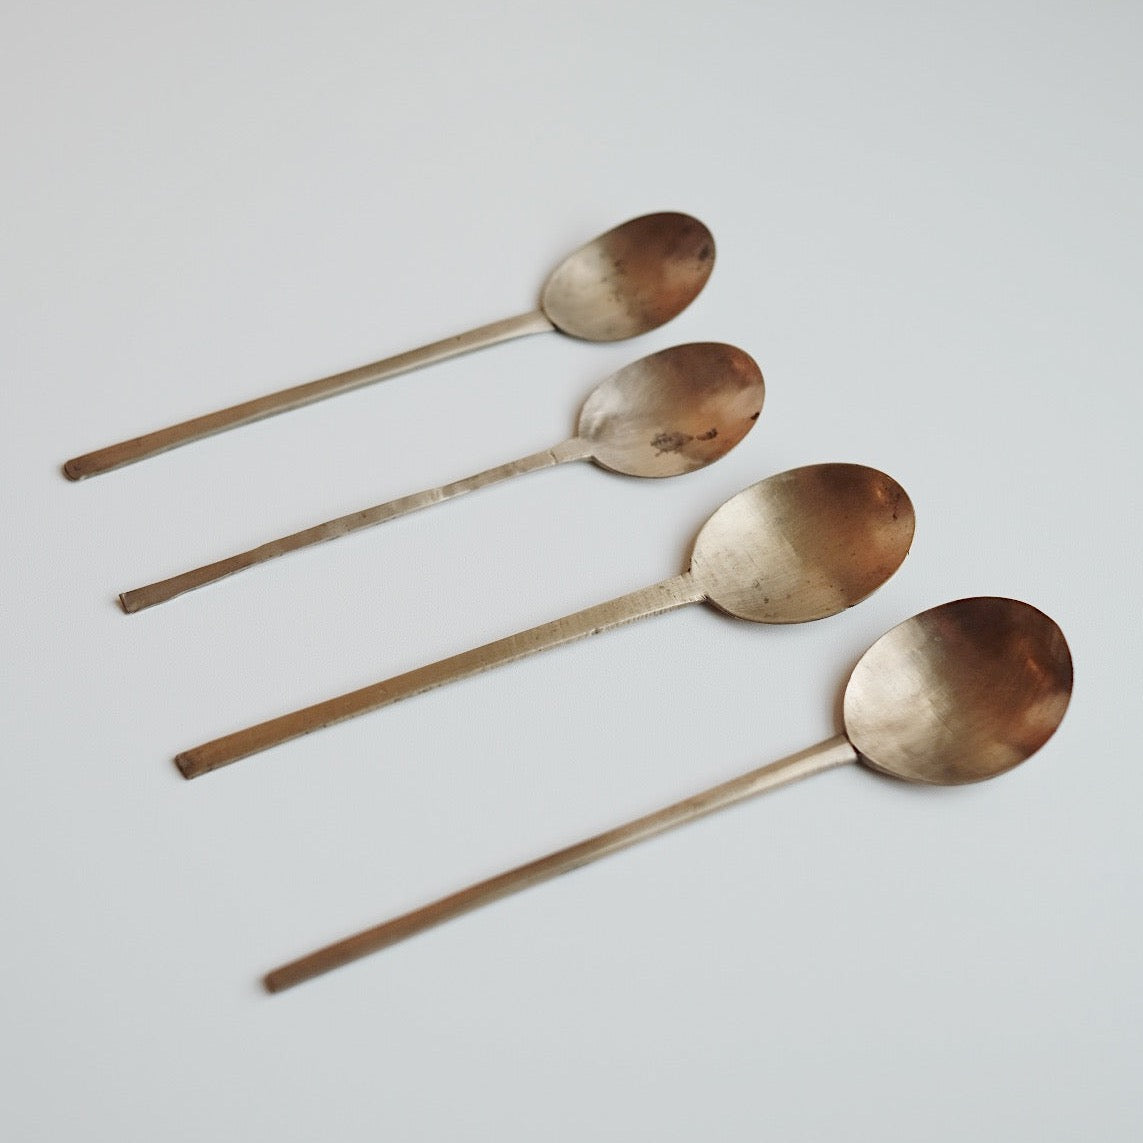 Antique Bangjja Spoon (set of 2)